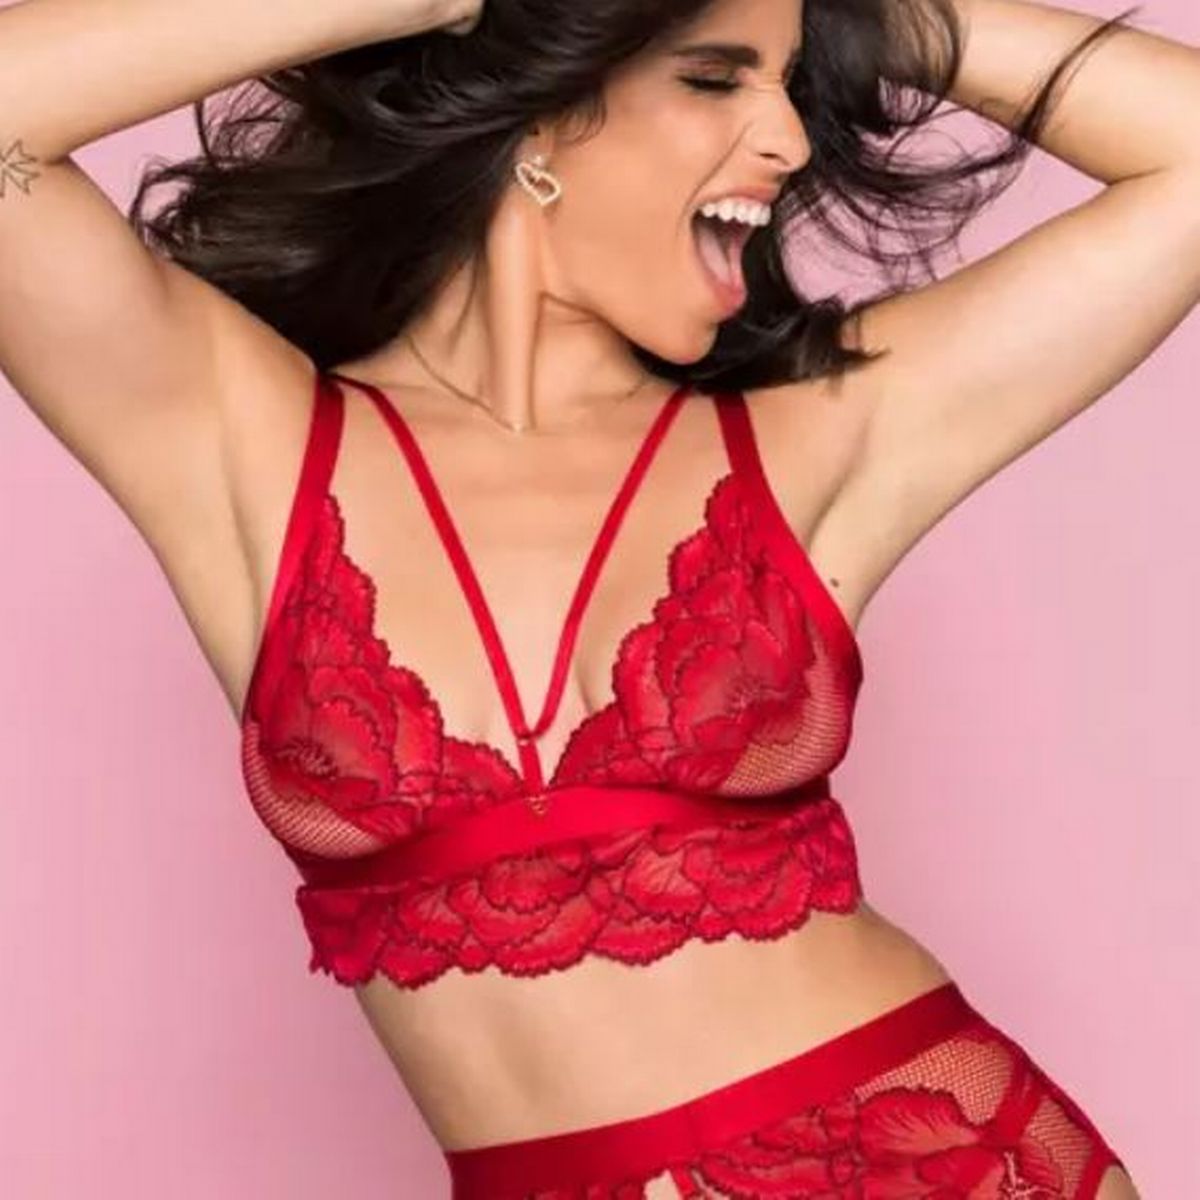 A woman wearing red lace underwear